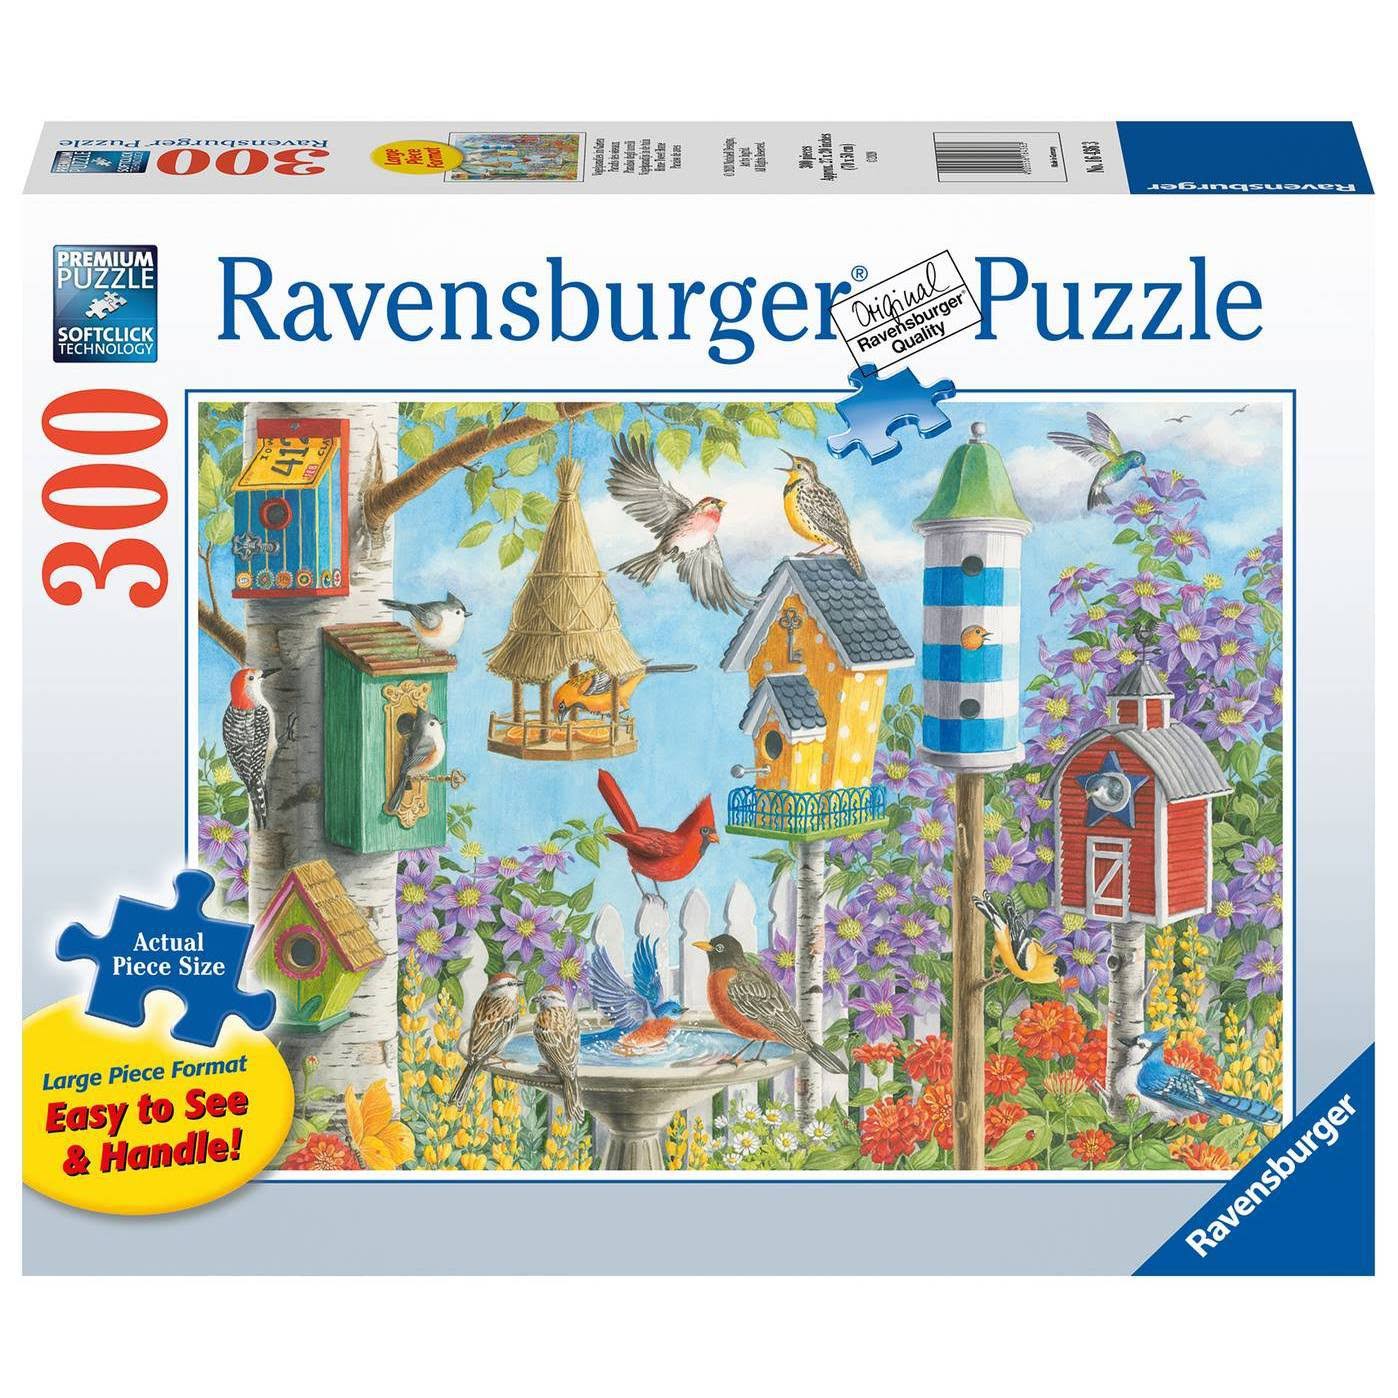 Ravensburger - Puzzle - Home Tweet Home - 300 Pieces